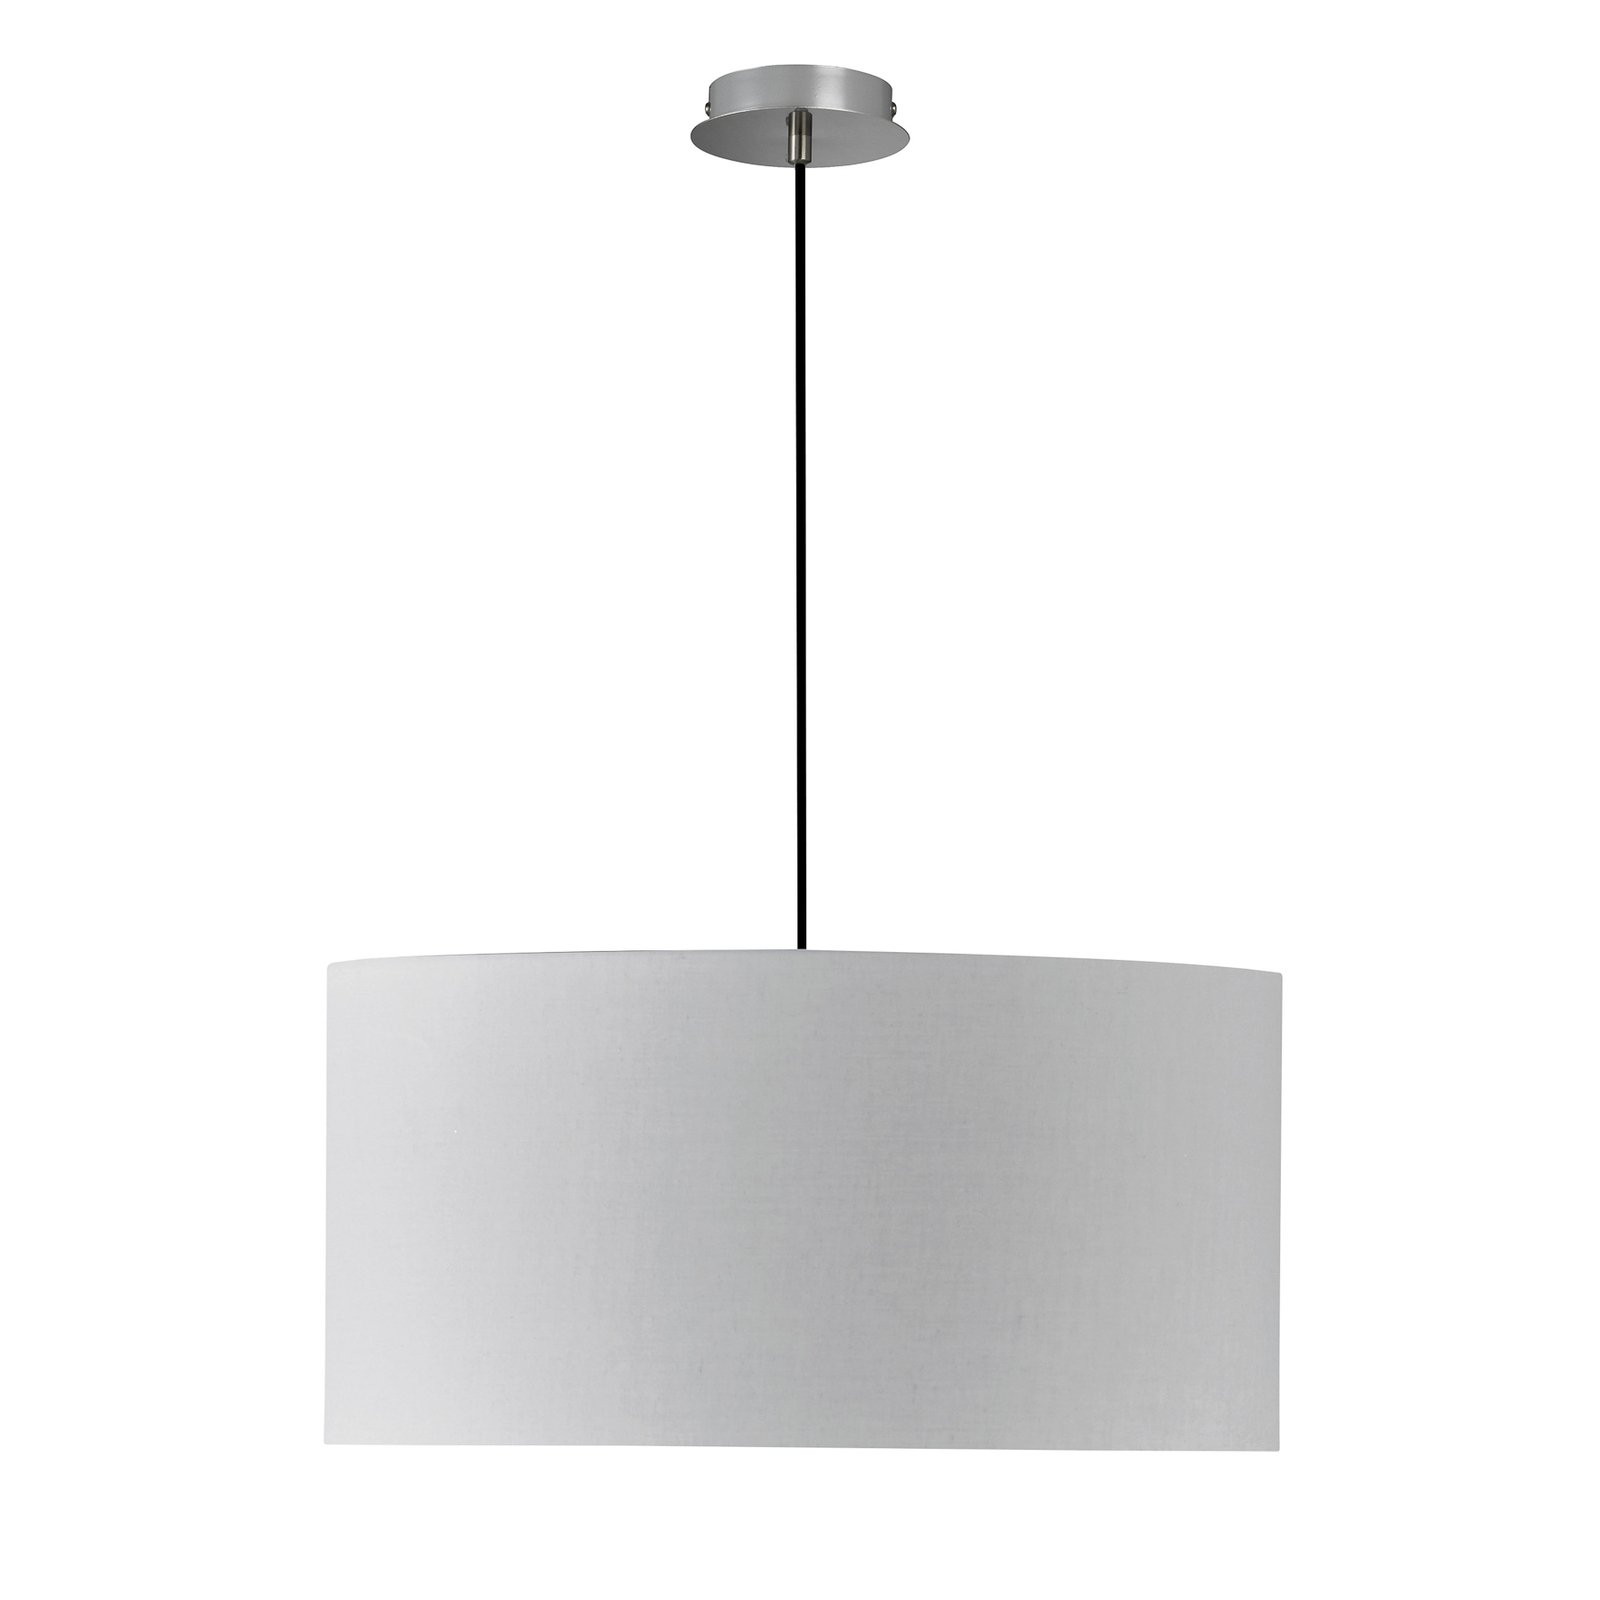 Schöner Wohnen Pina hanging lamp, simple, light